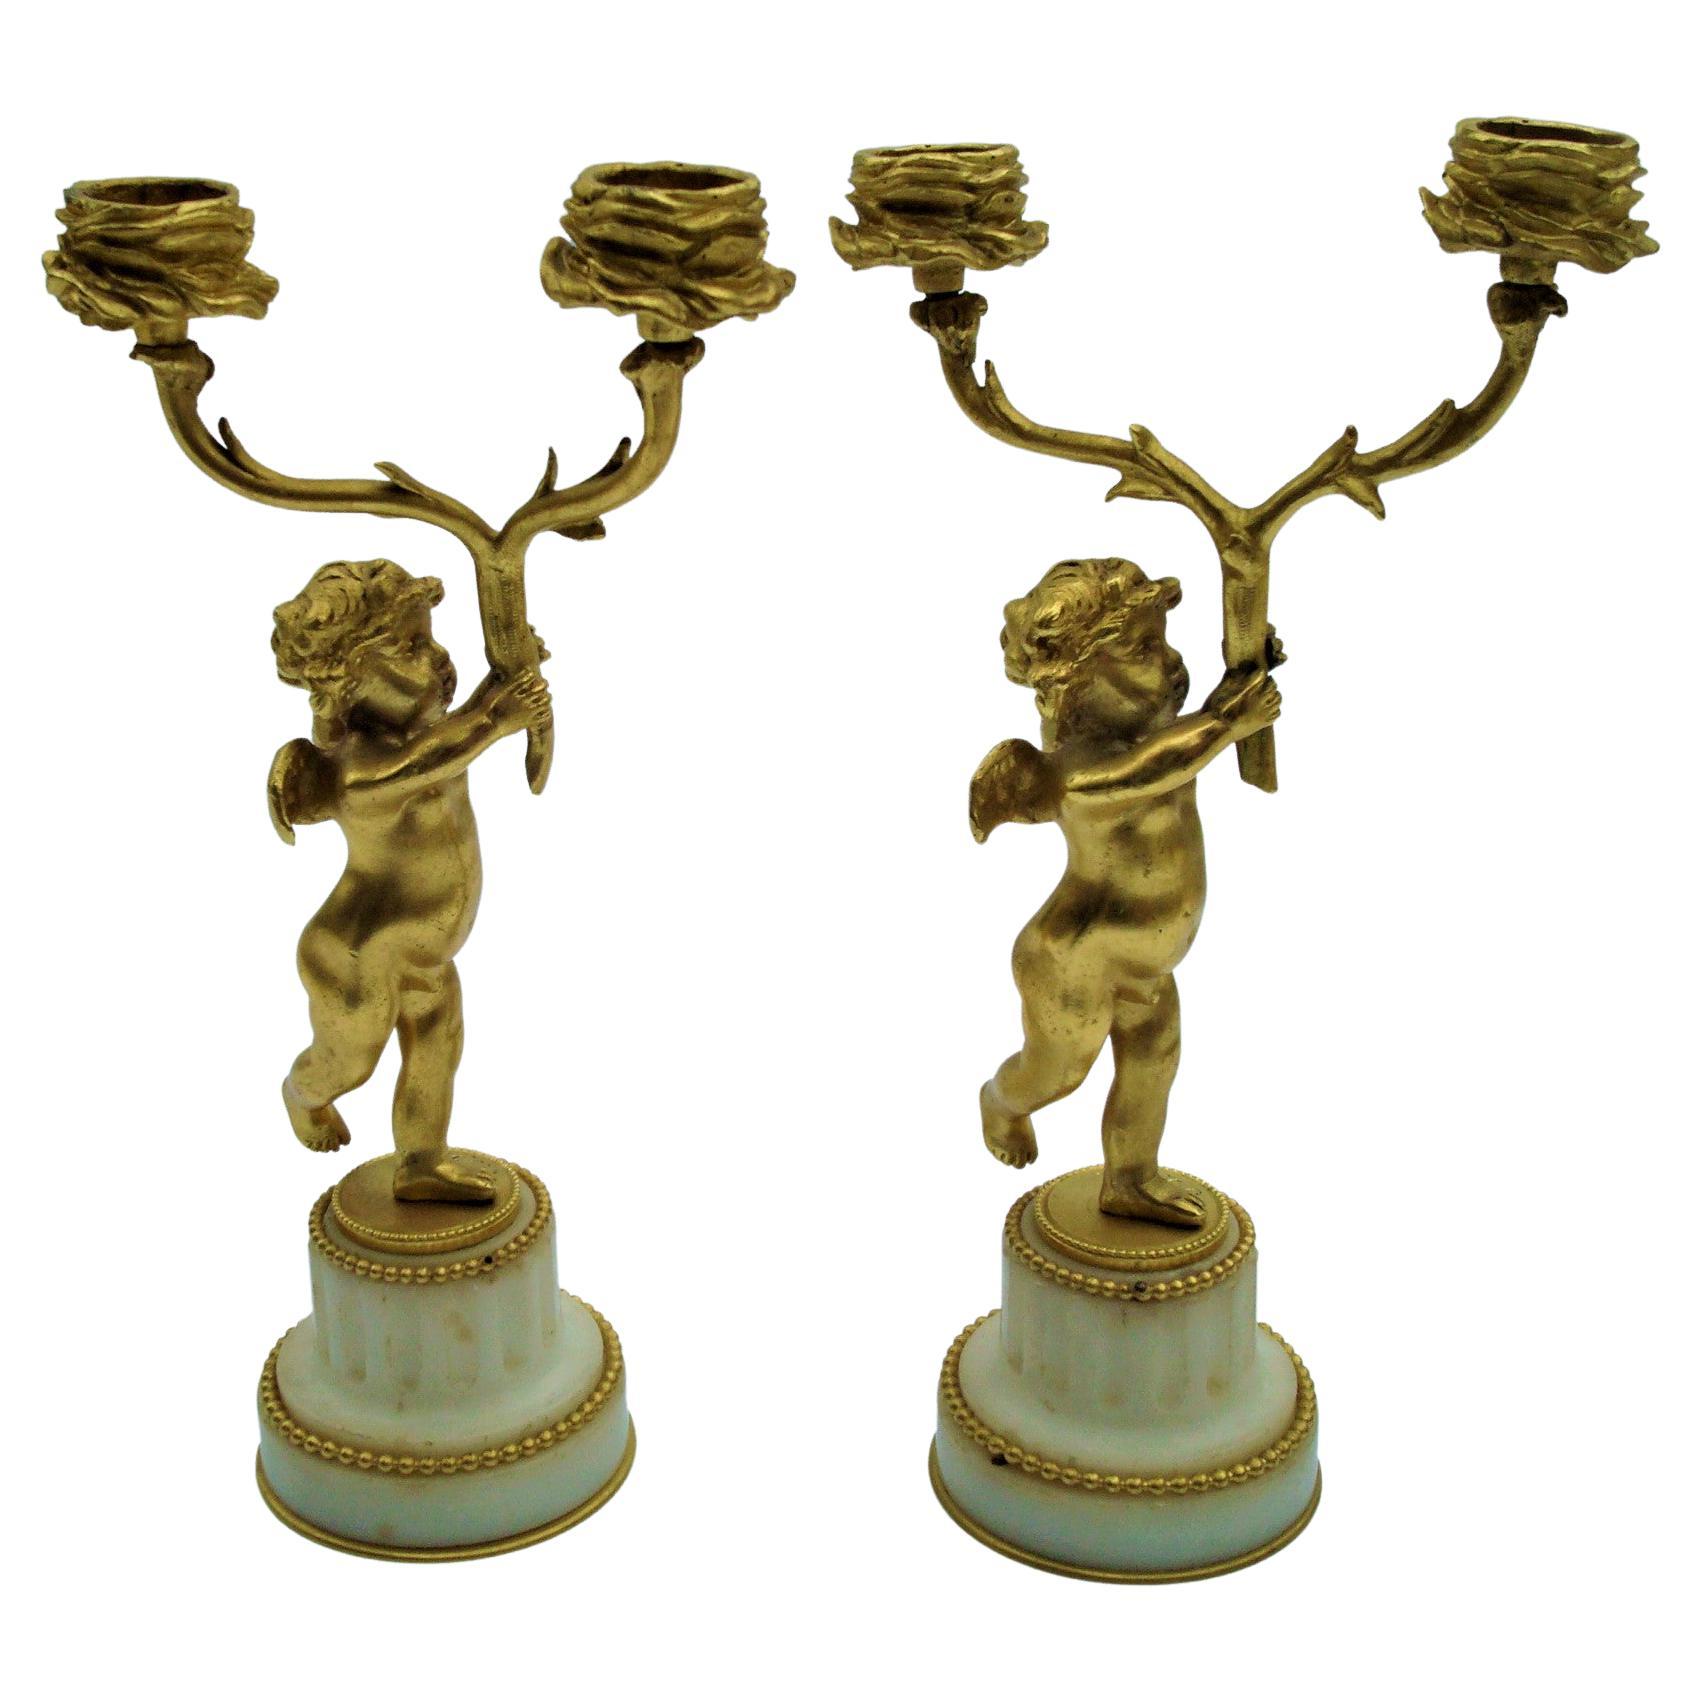 19th Century Bronze Gold-Plated Two-Arm Cherub Figural Candelabras, F. Linke